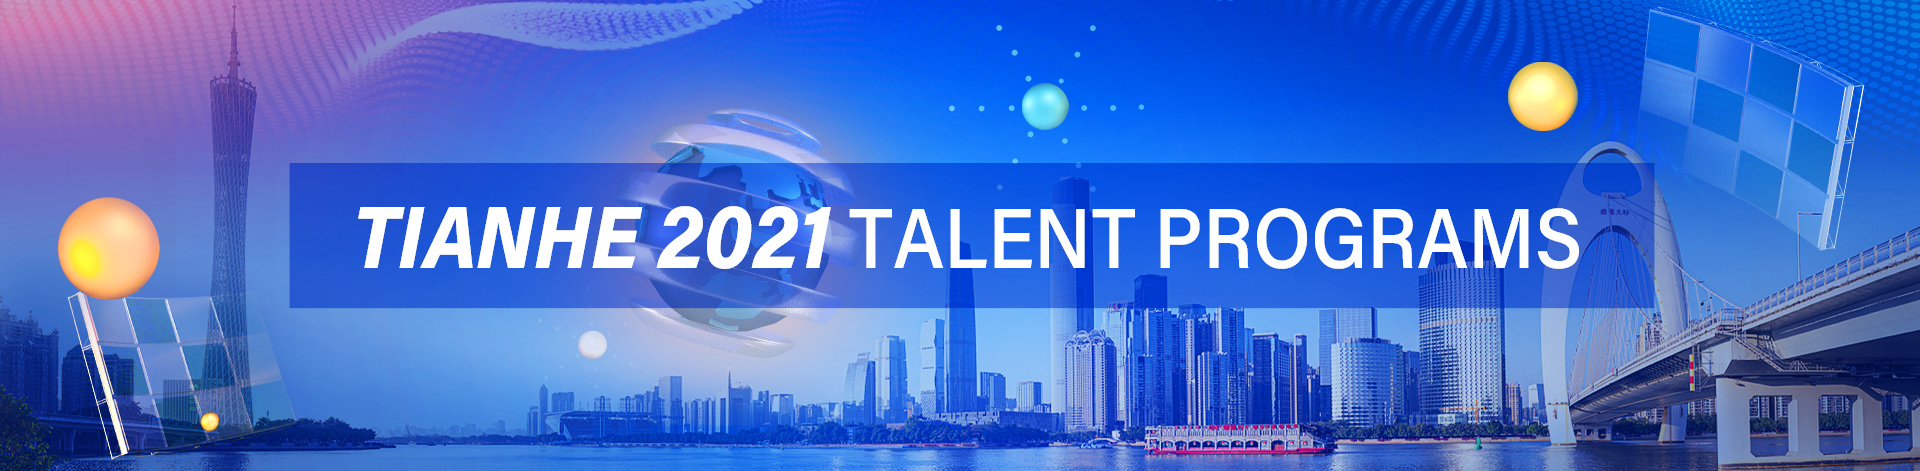 Tianhe 2021 Talent Programs